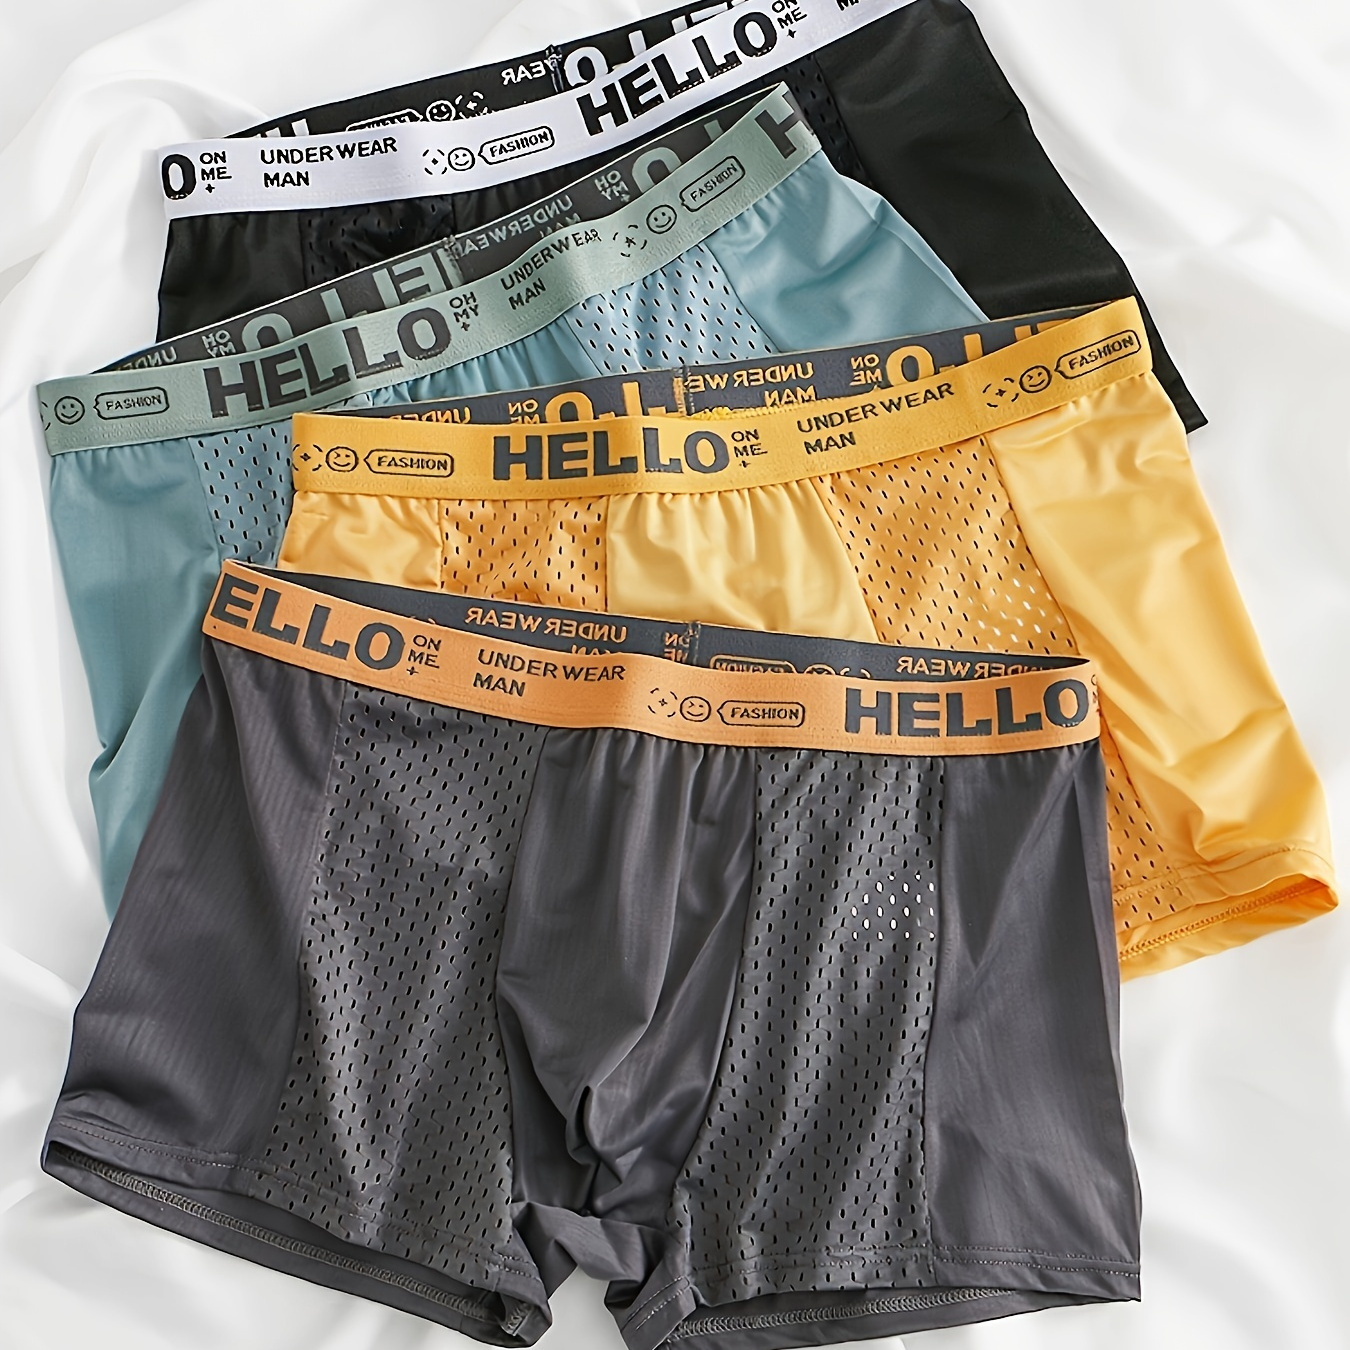 

4pcs Men's Underwear, 'hello' Print Fashion Breathable Comfy Stretchy Boxer Briefs Shorts